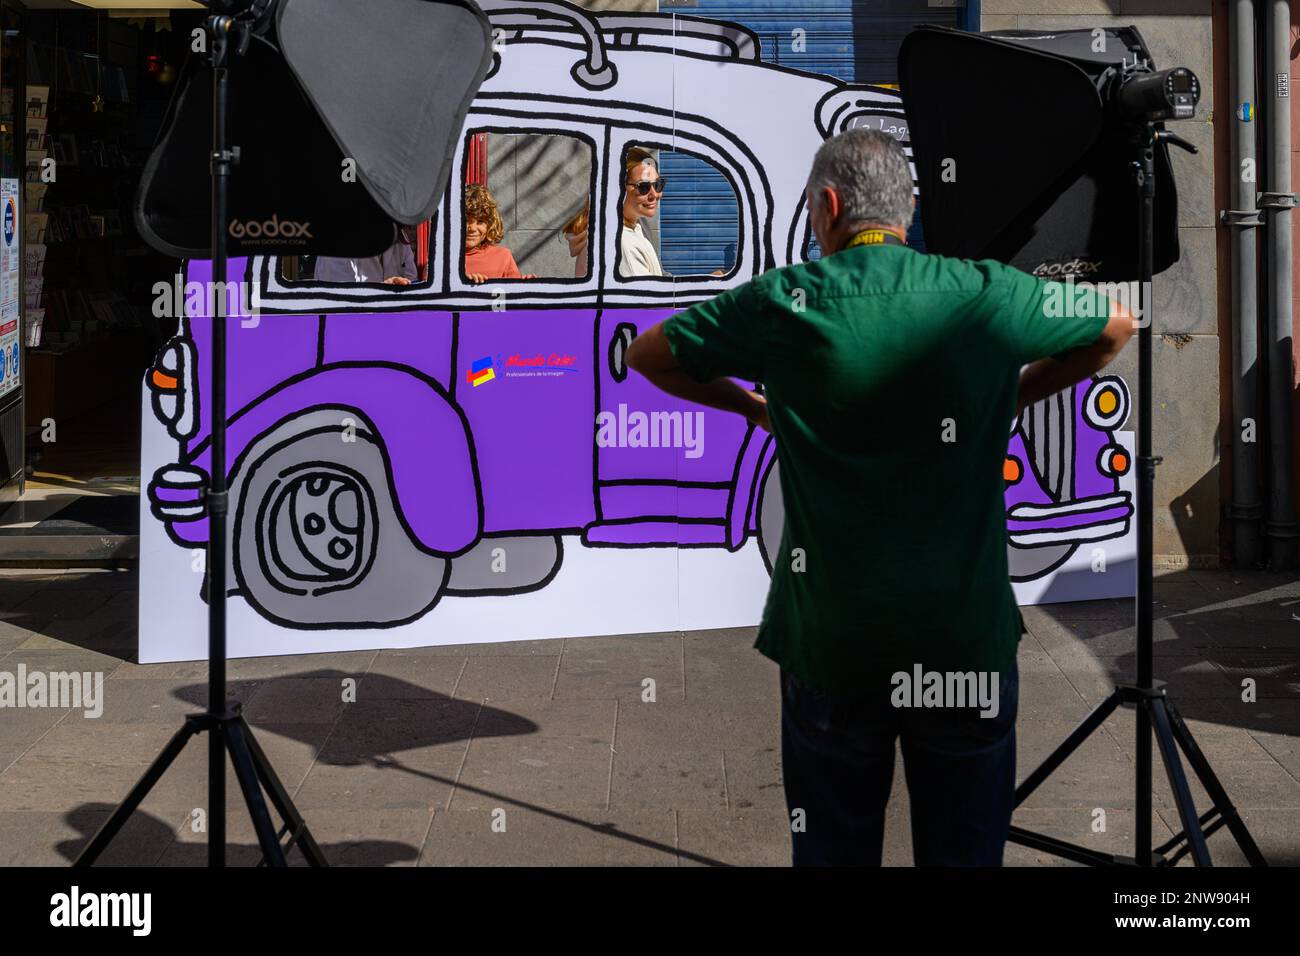 Ein Fotograf organisiert Kunden in einem Foto Mundo Color Comicbus im Rahmen des Festivals La Noche en Blanco in San Cristobal de la Laguna, Teneriffa. Stockfoto